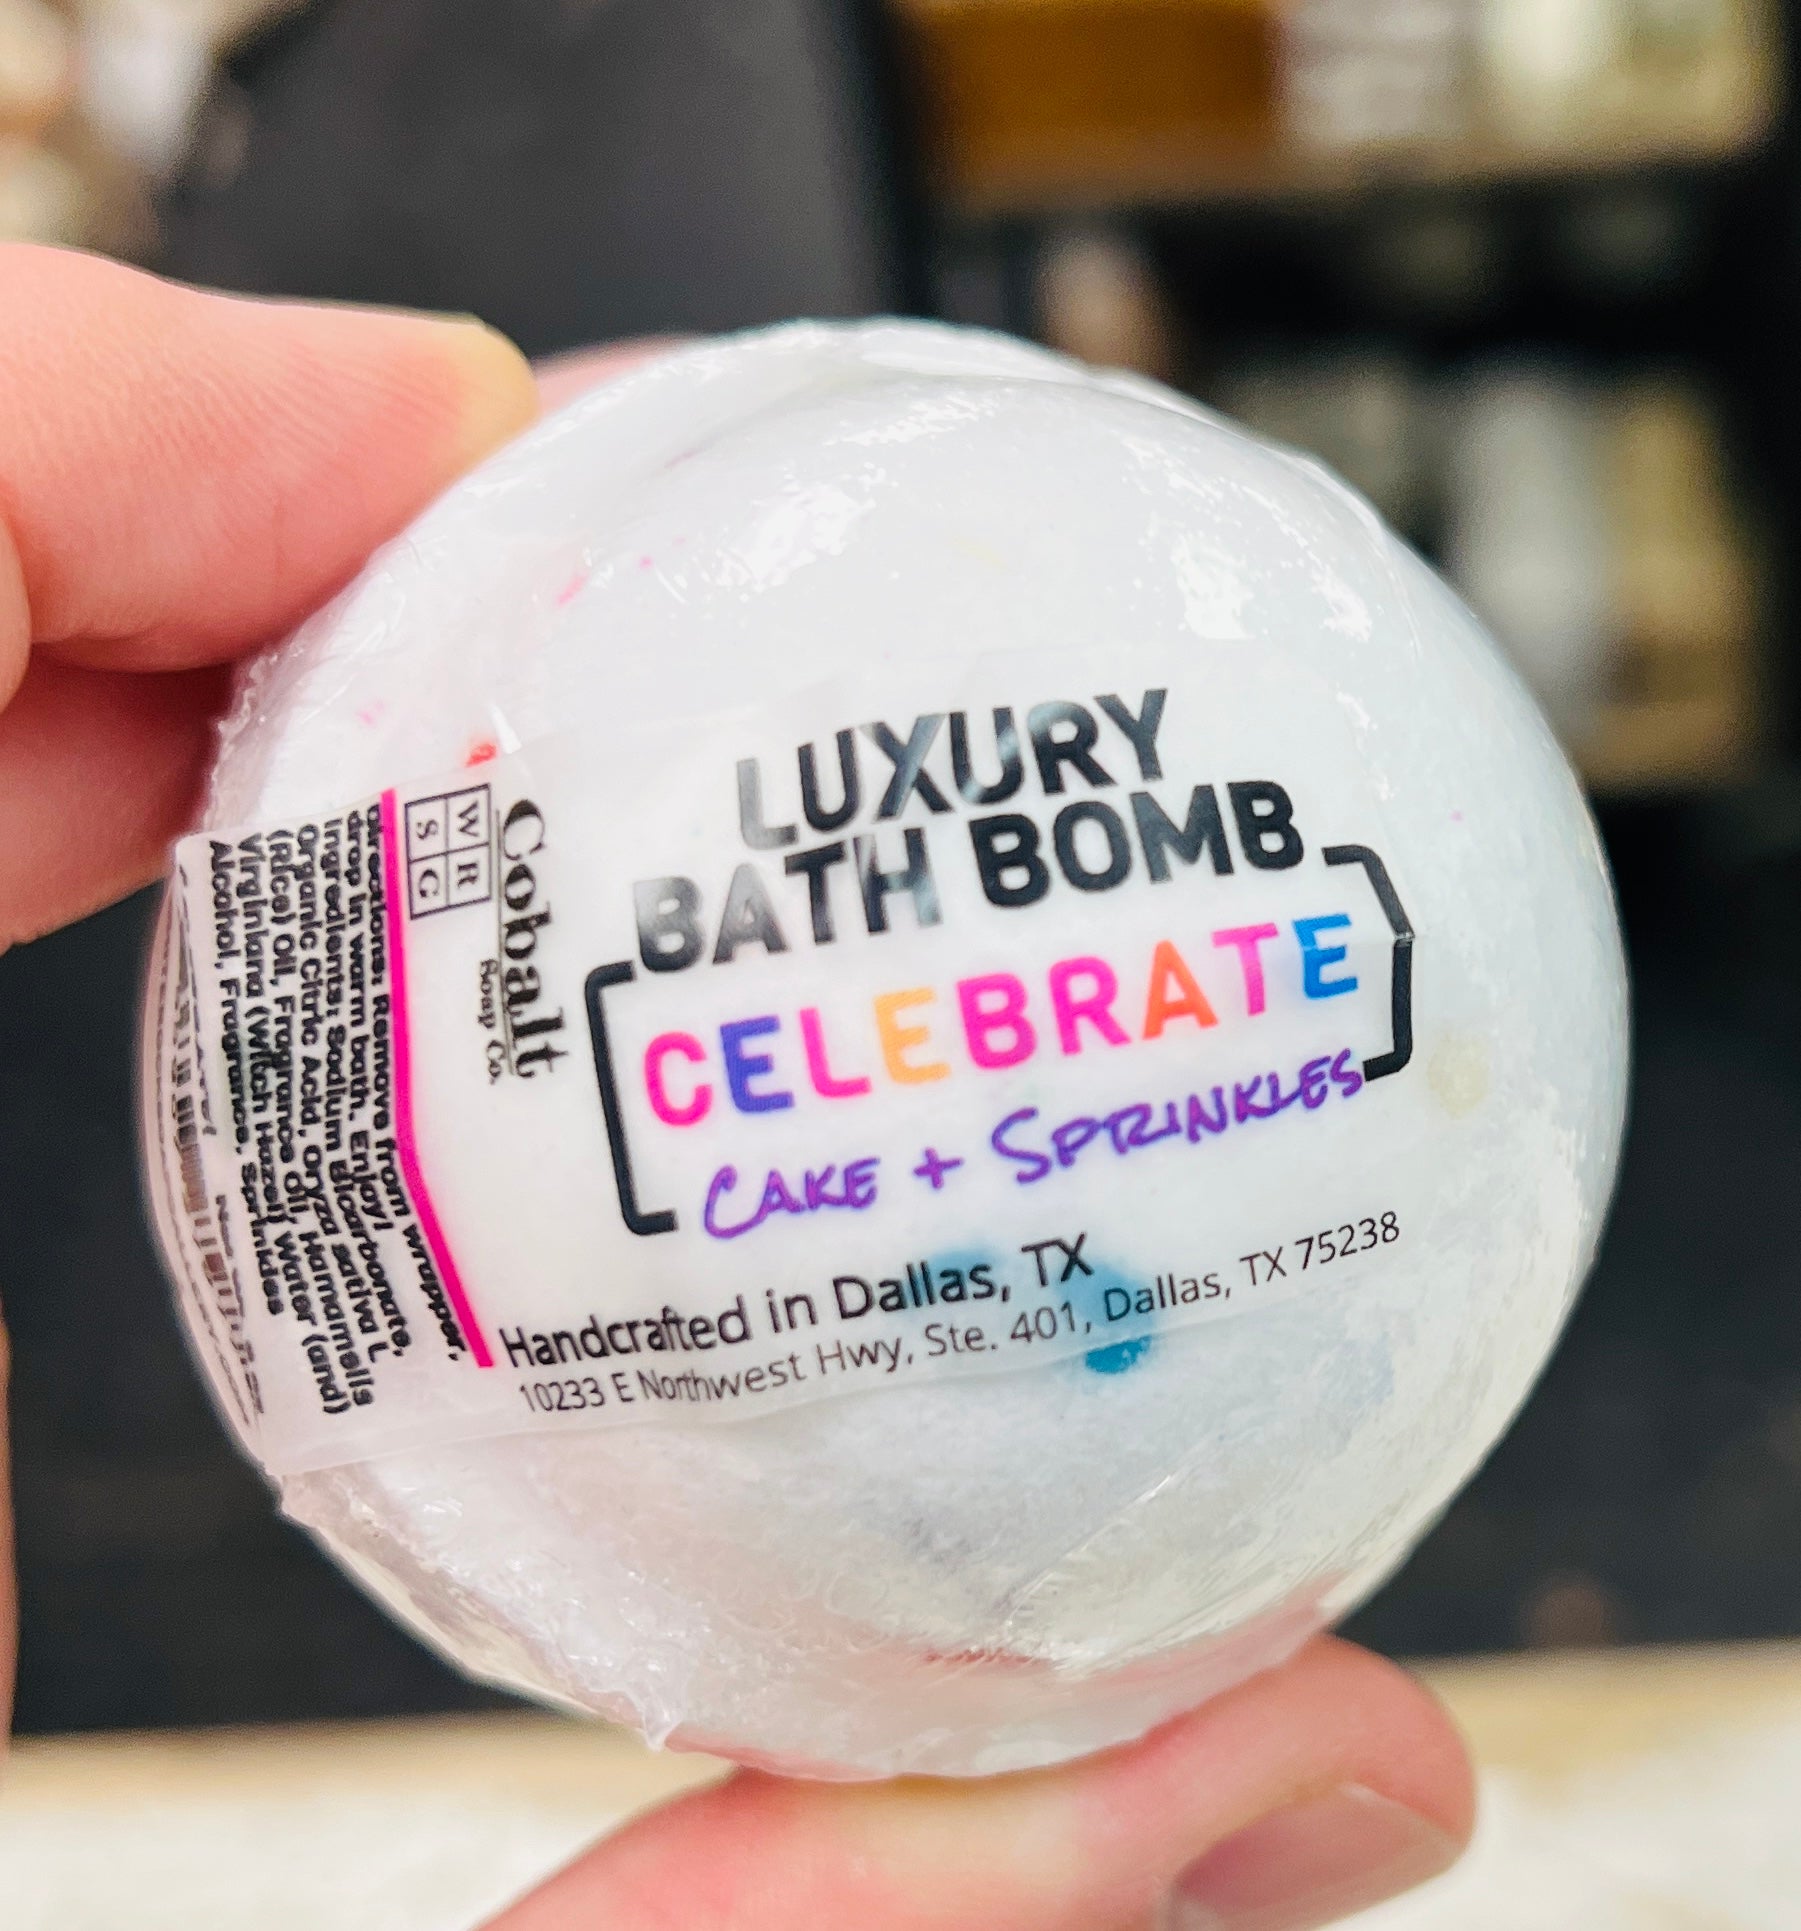 Cobalt Soap Co. Luxury Bath Bomb - Celebrate!